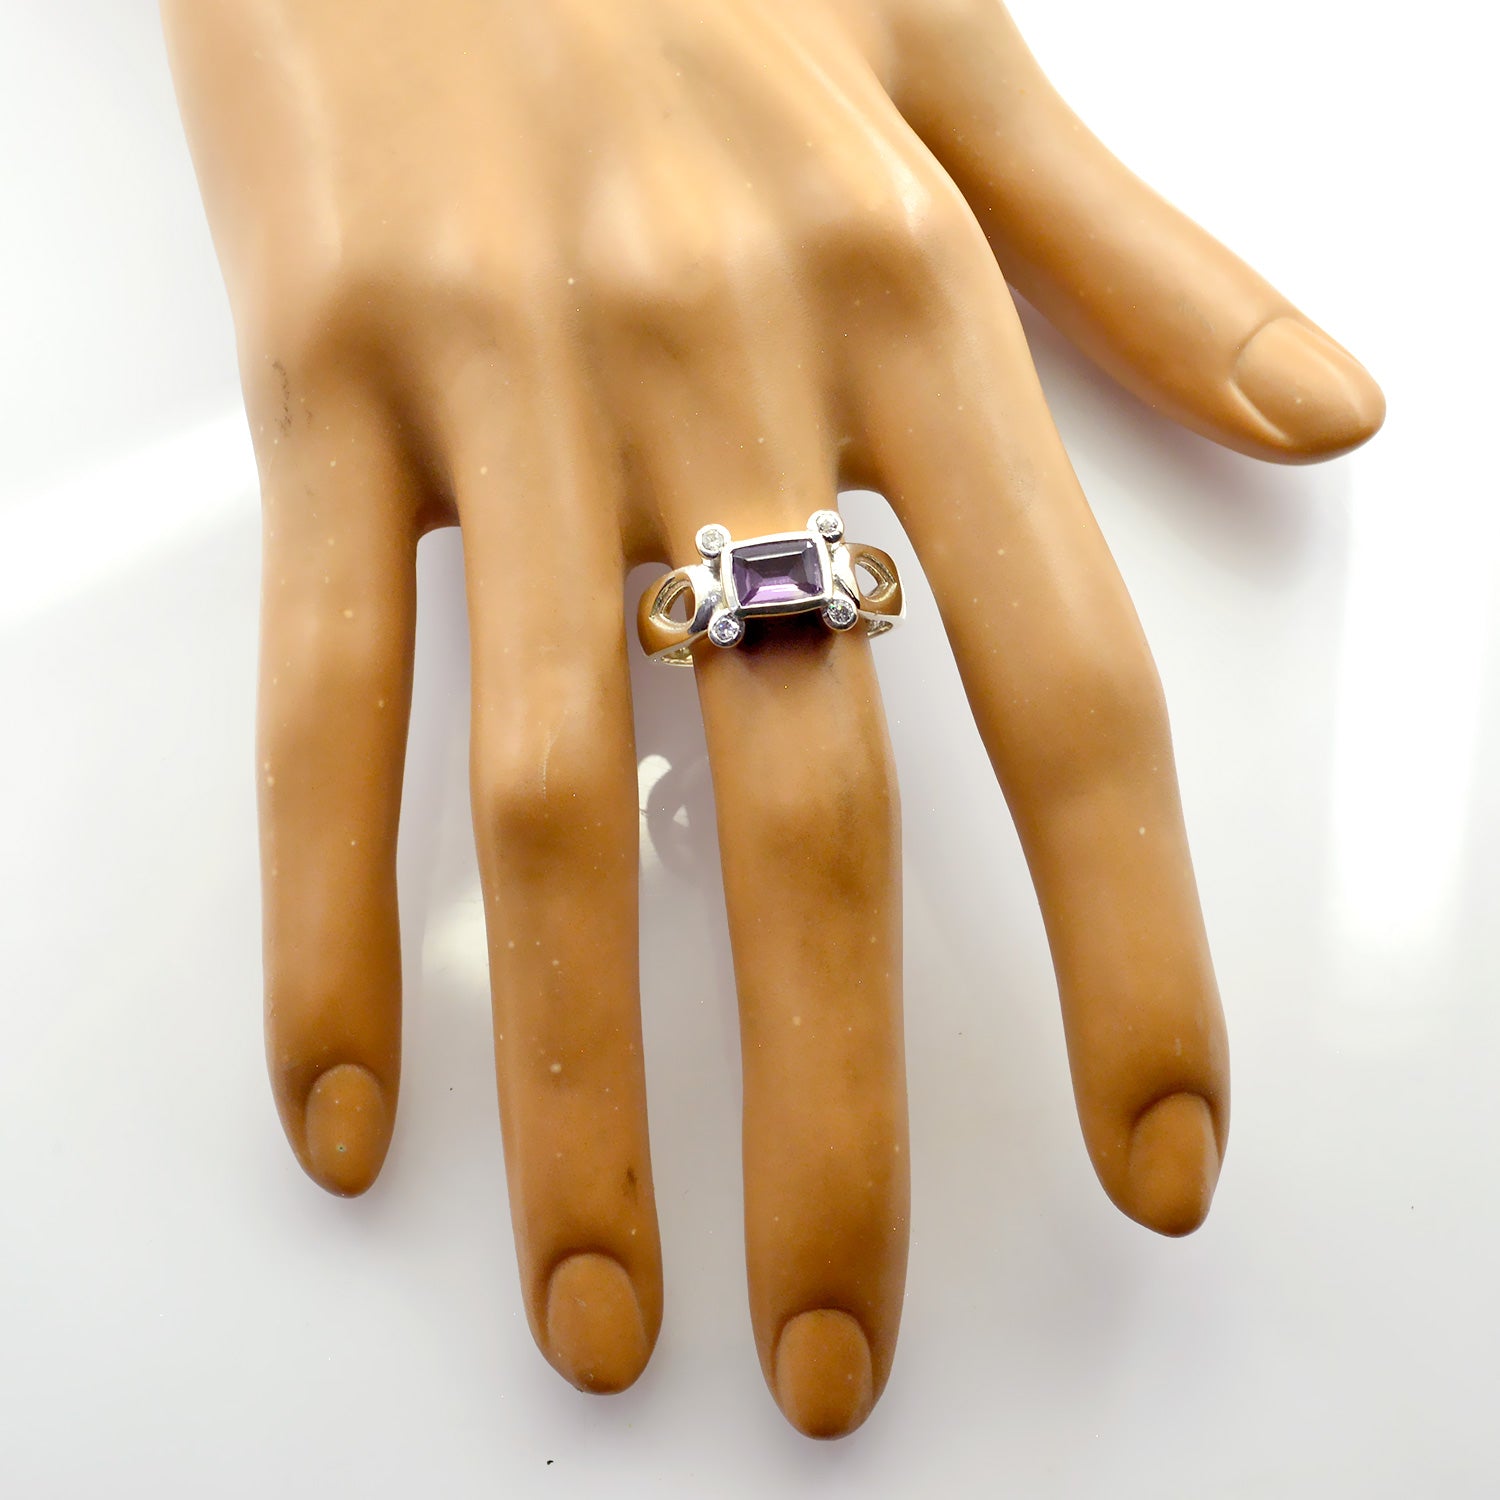 Riyo Genuine Gemstones Amethyst 925 Silver Rings Gift For Boxing Day